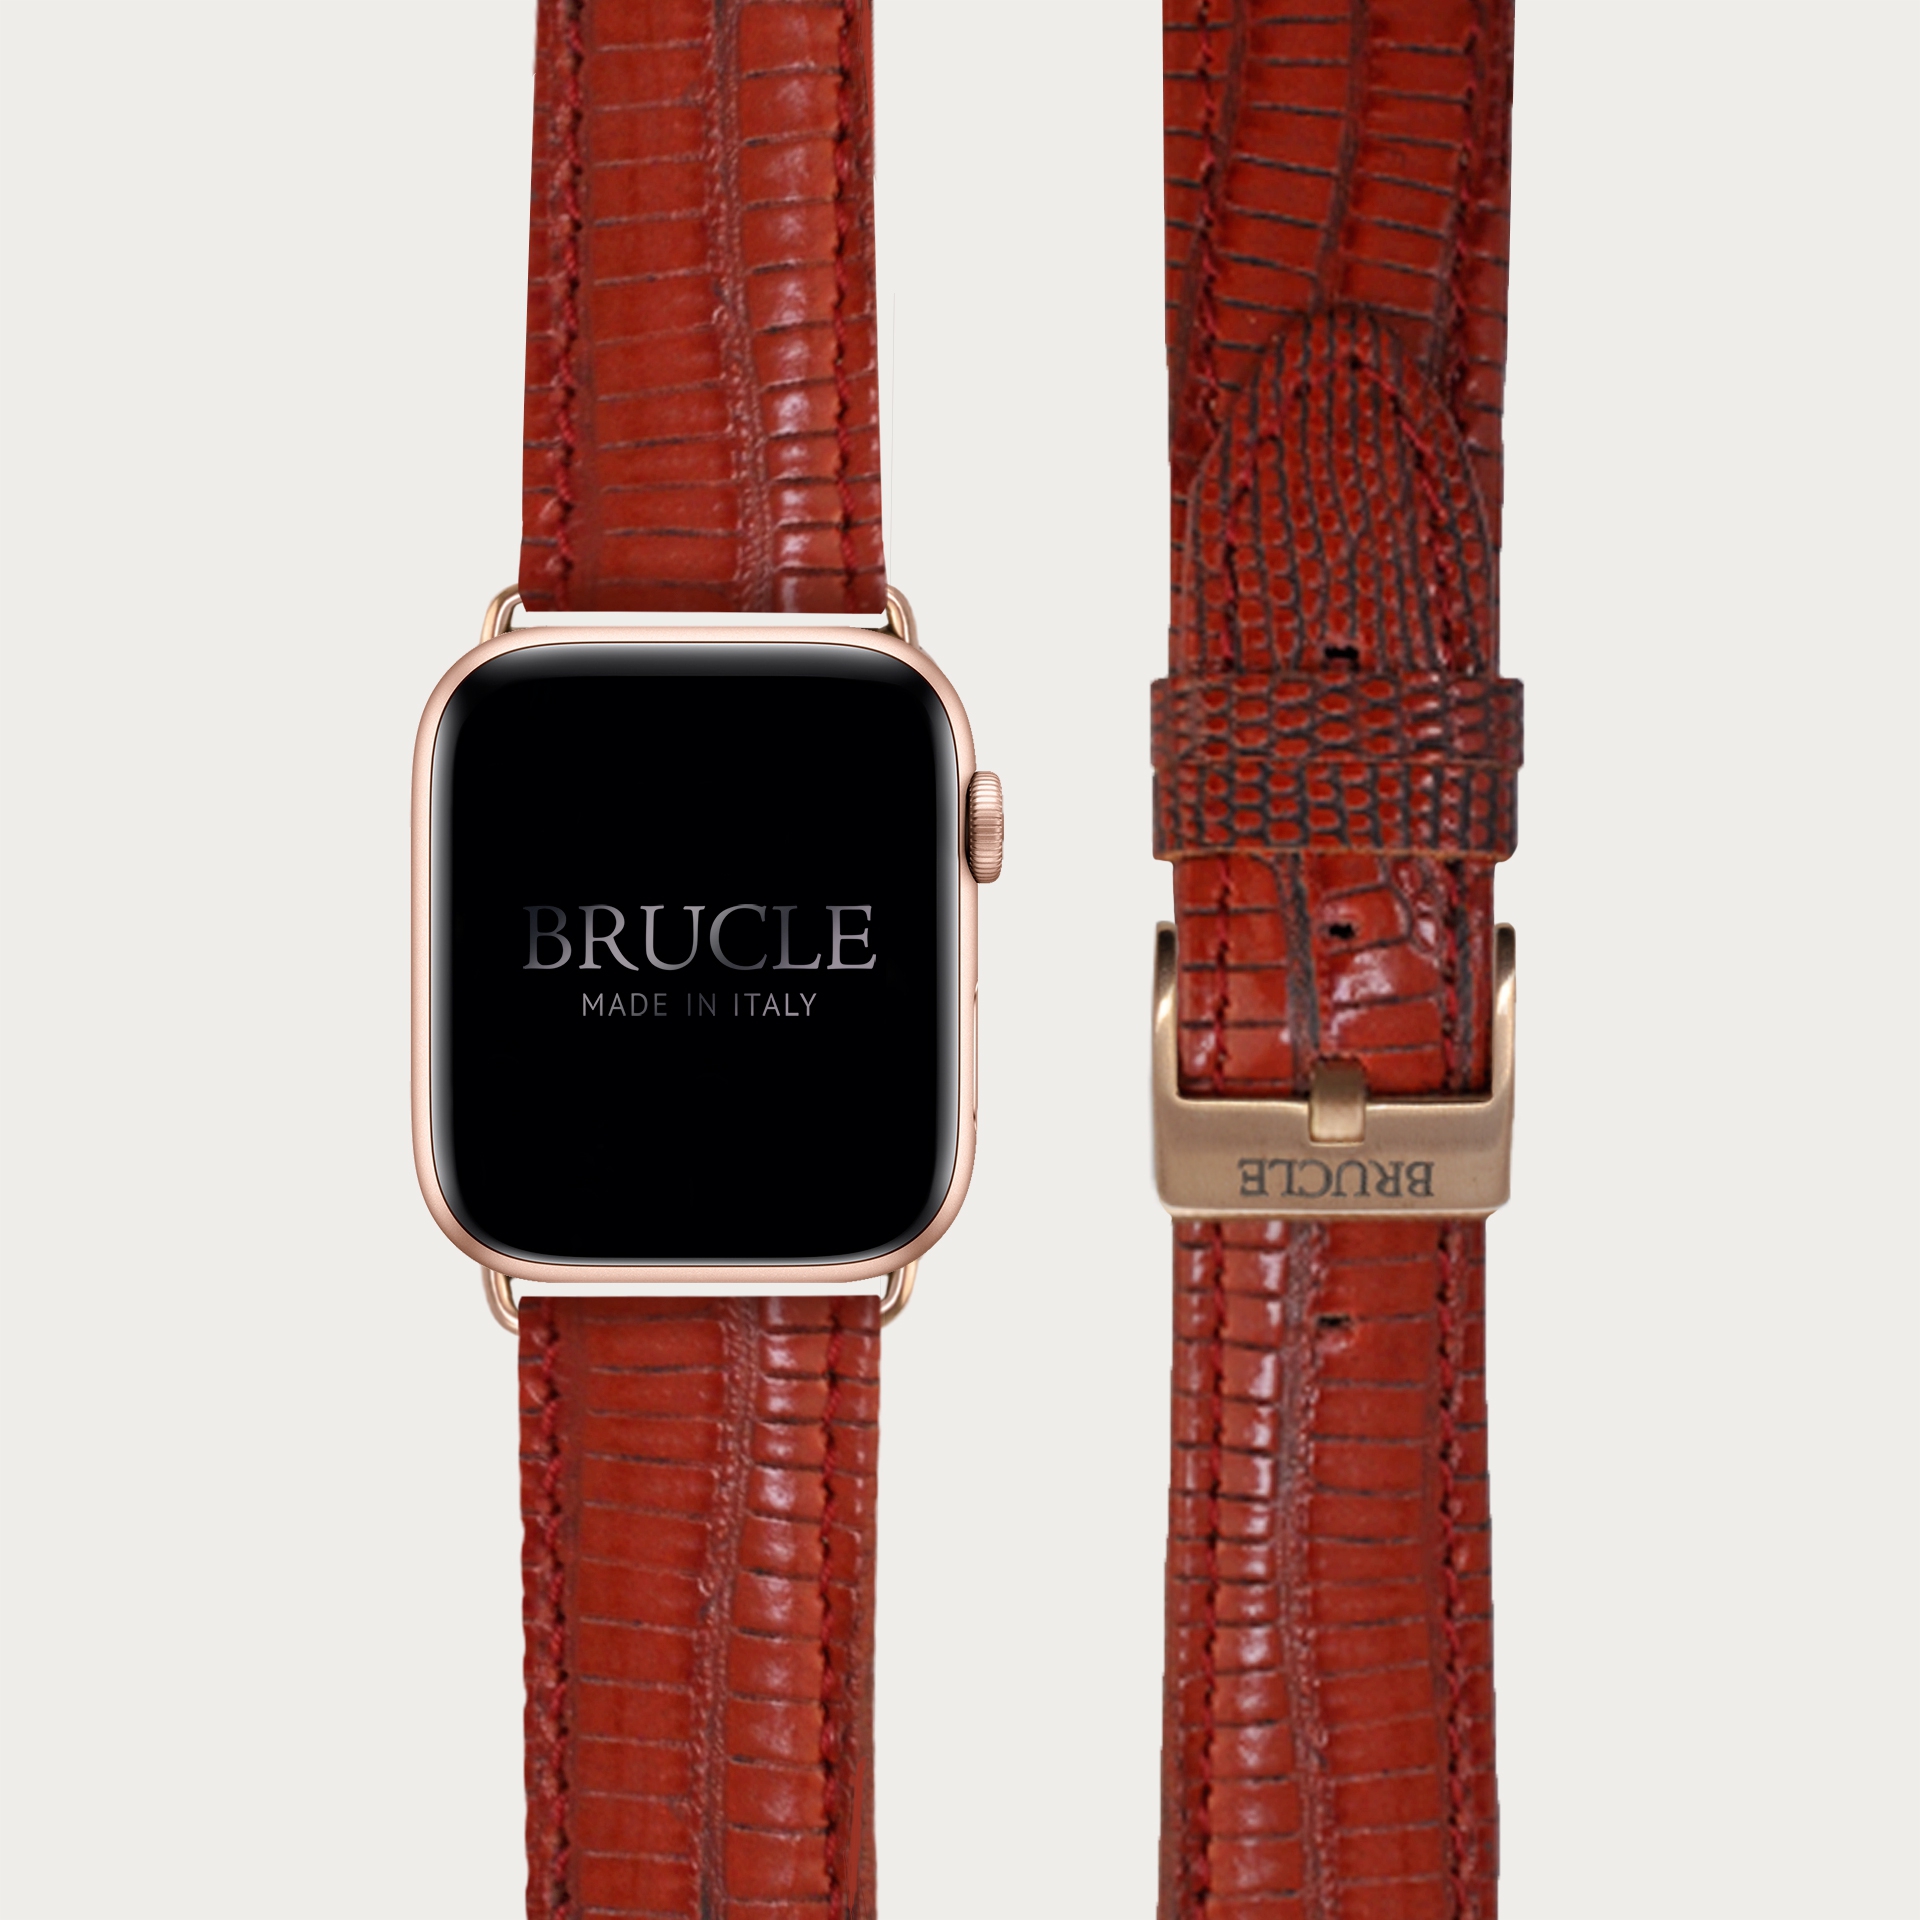 Brucle Armband kompatibel mit Apple Watch / Samsung Smartwatch, rot farbenes Leder mit Tejus-Print